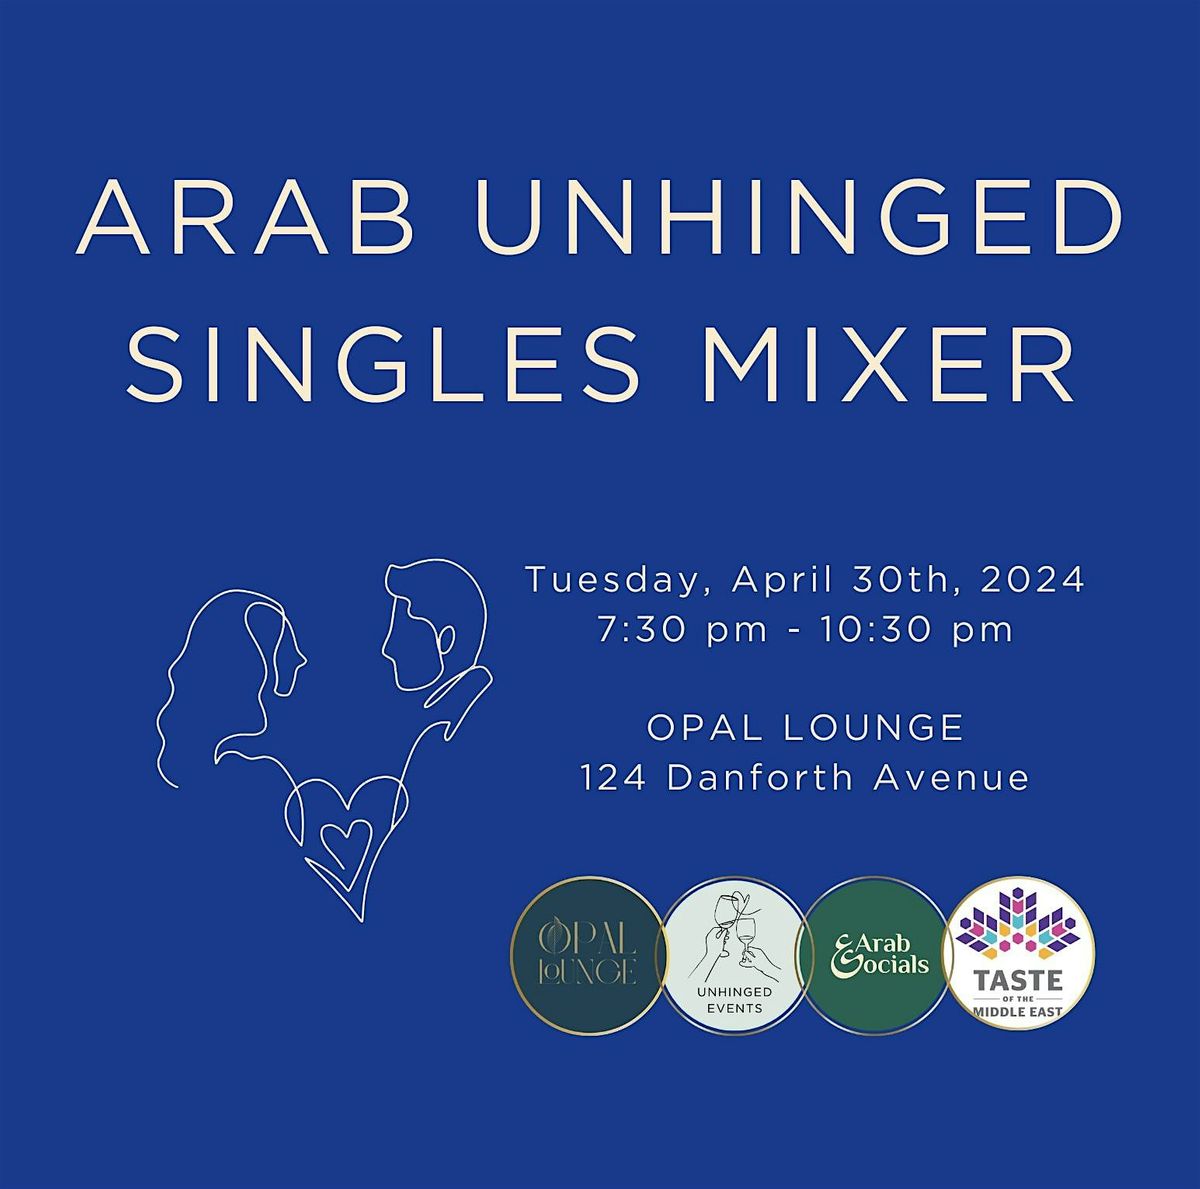 Toronto Singles Mixer: Unhinged - Arab Edition!